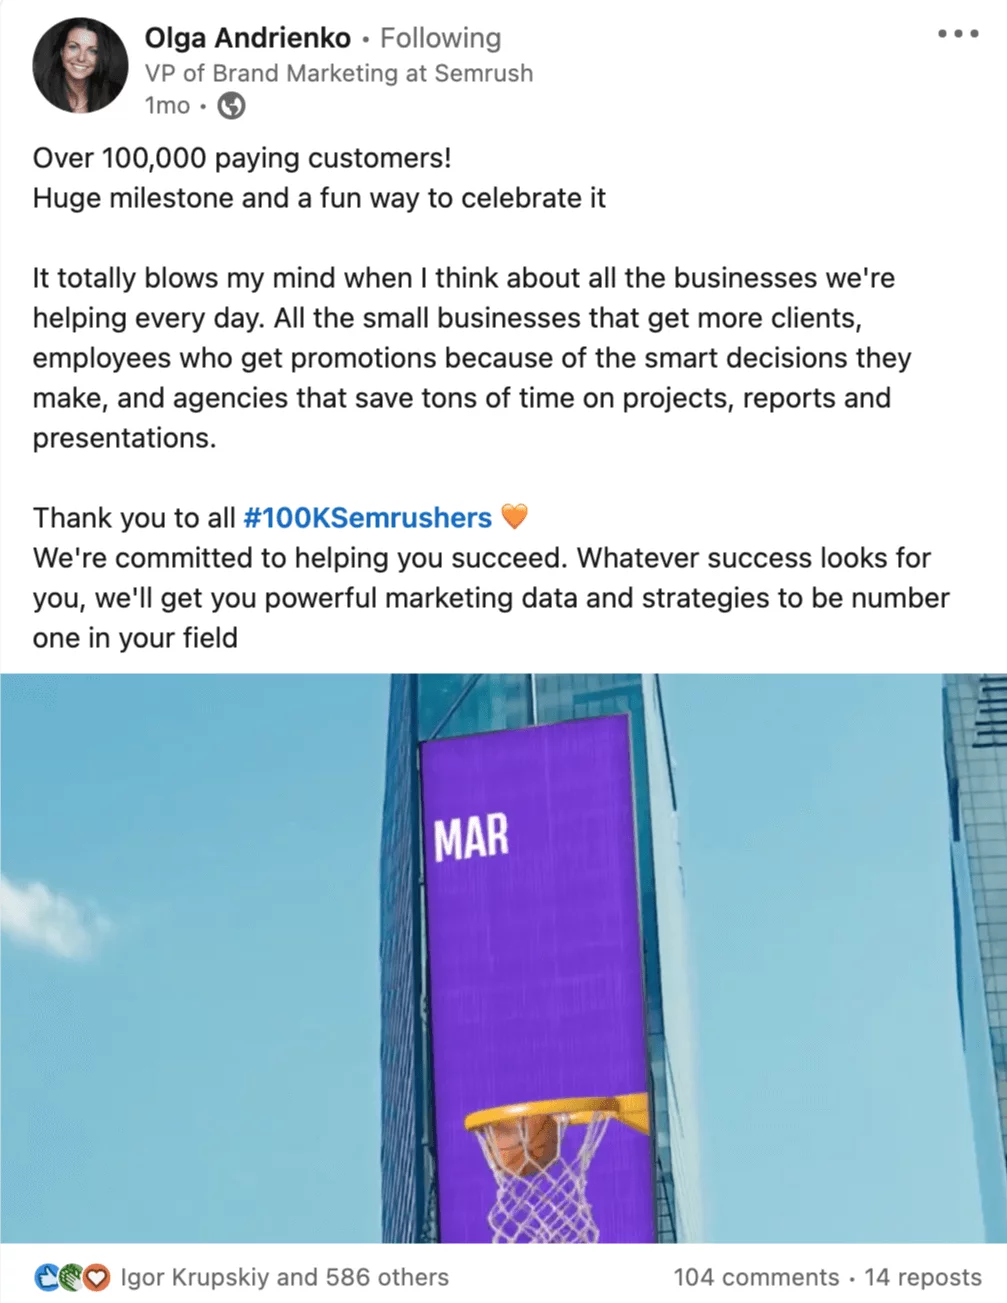 LinkedIn post by SemRush VP of Brand Marketing Olga Andrienco sharing the company's milestone of 100,000 paying customers.